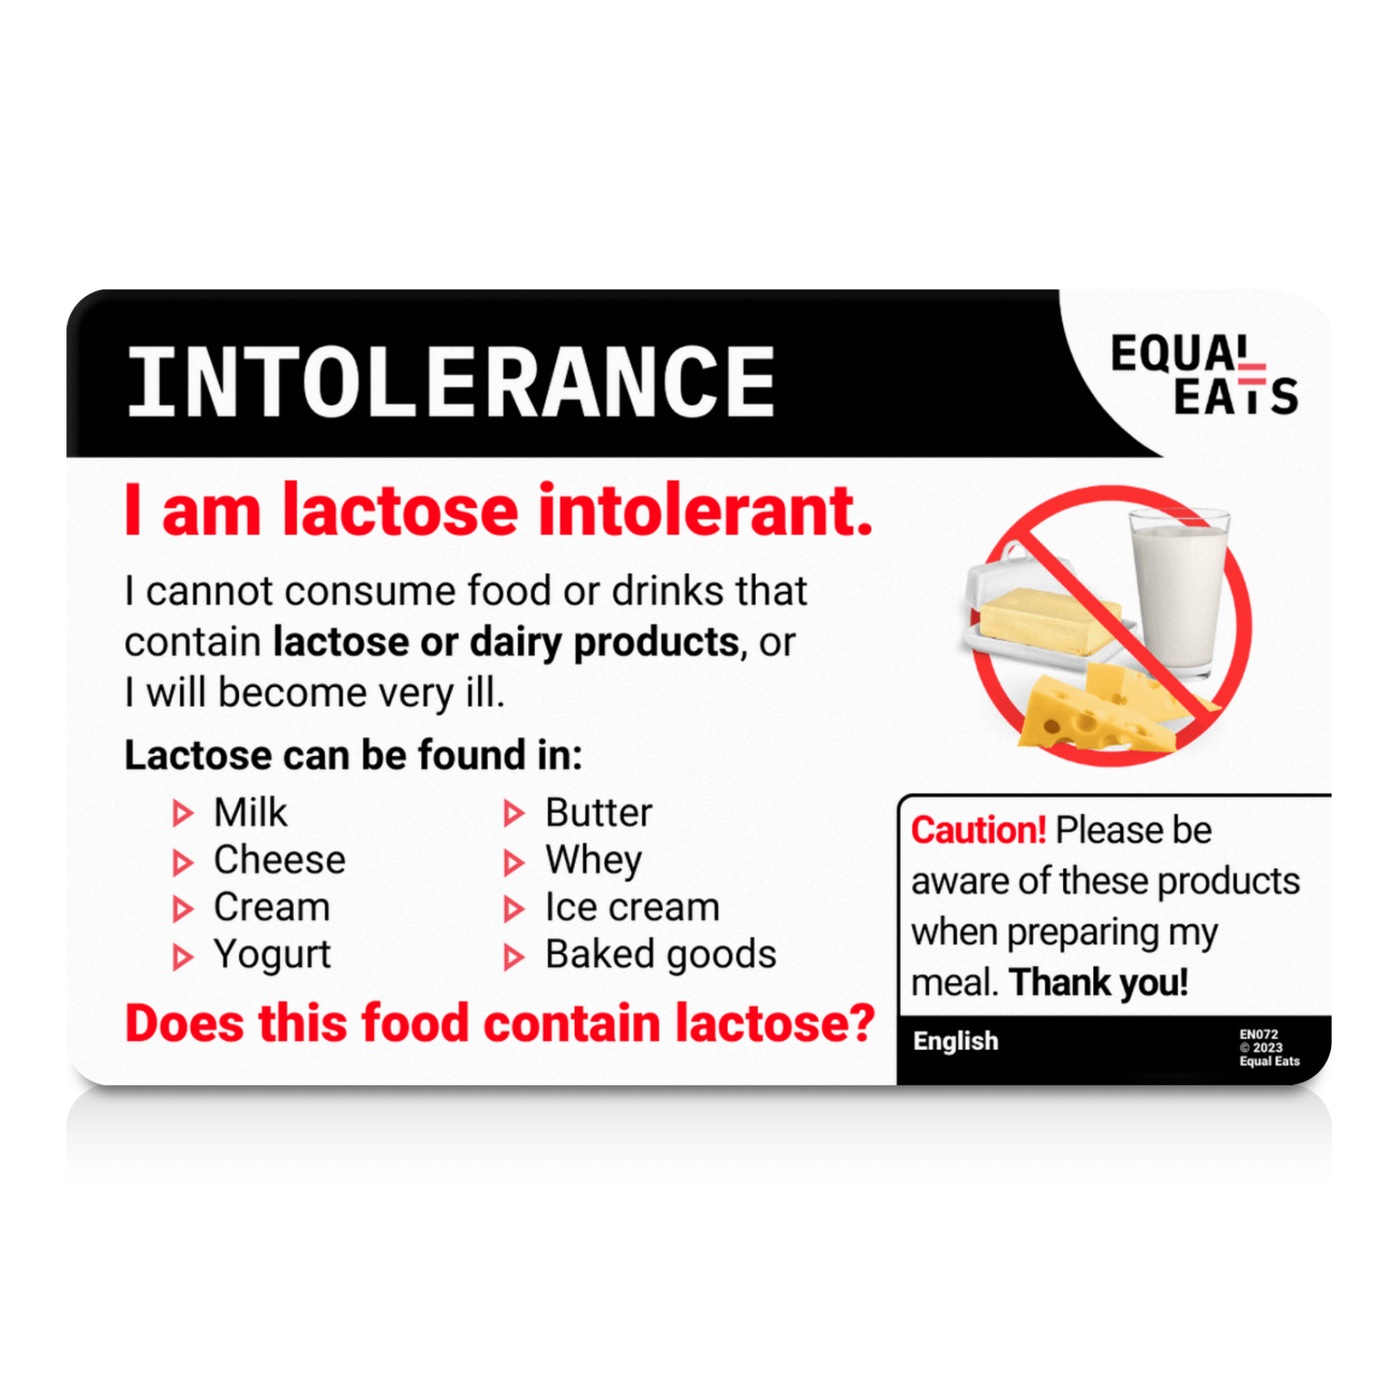 Icelandic Lactose Intolerance Card